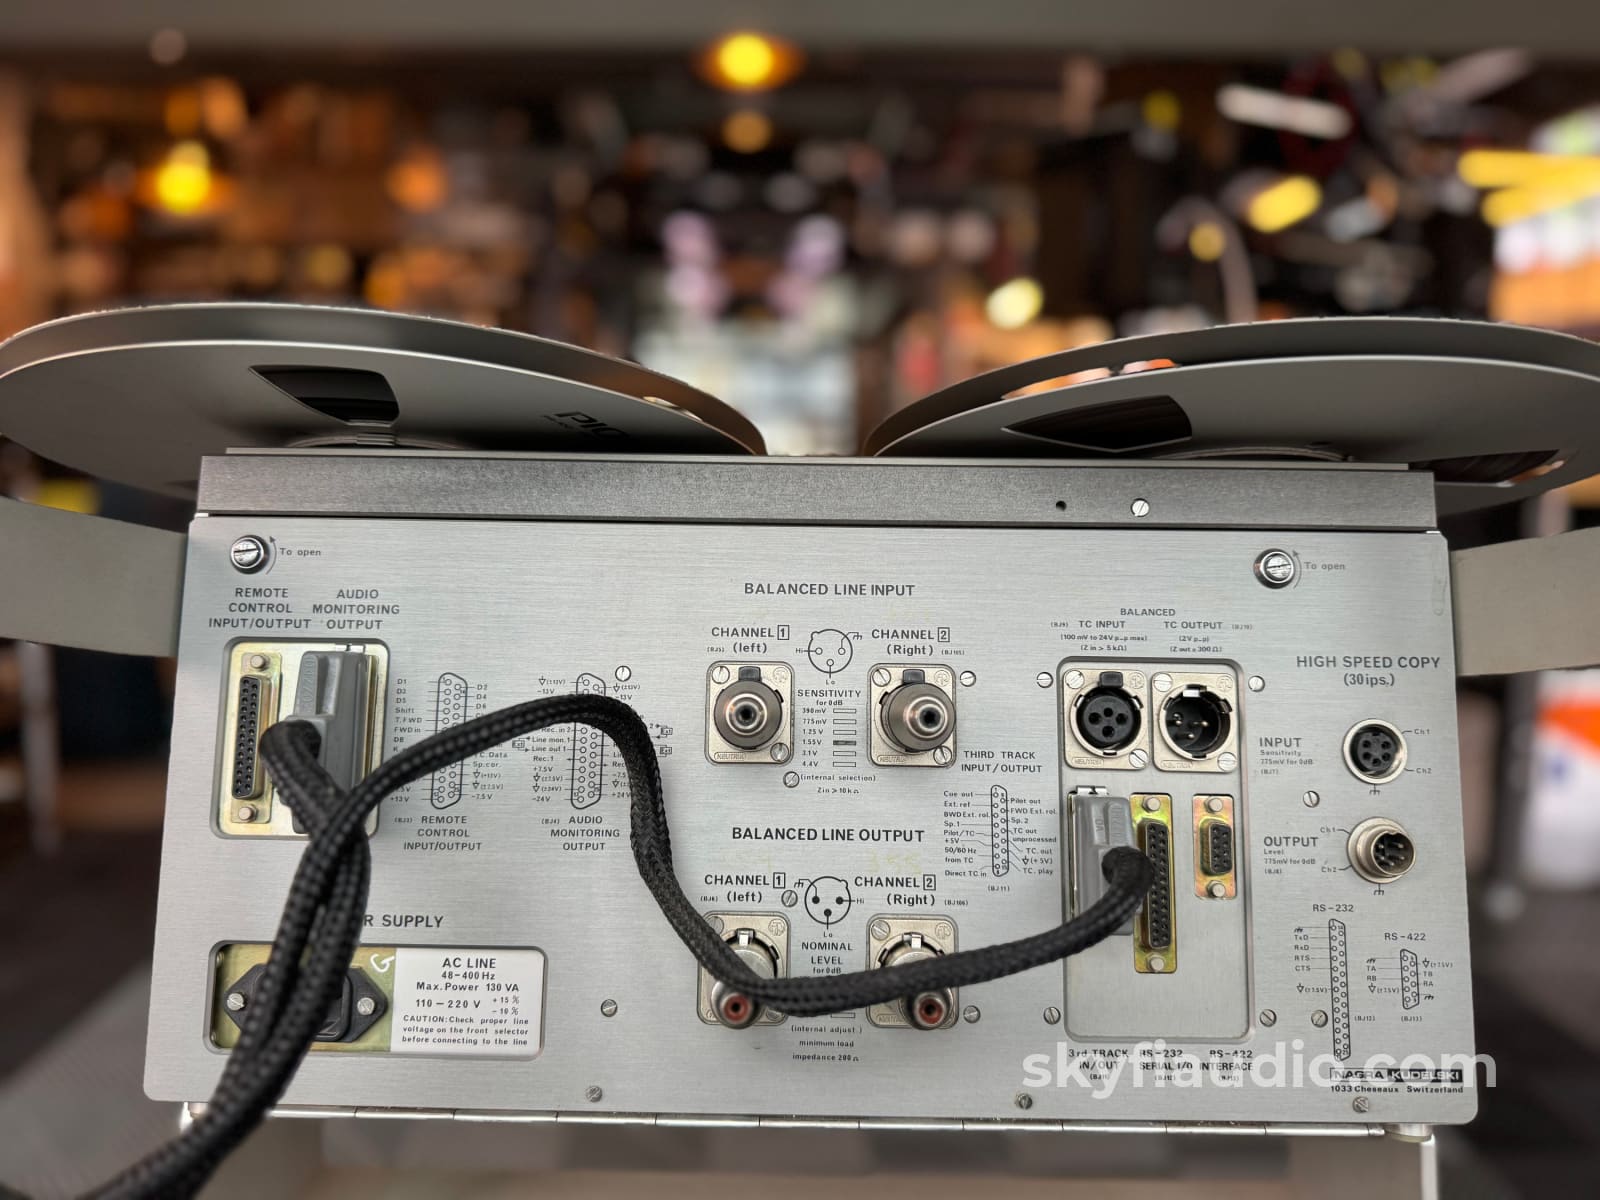 Nagra T-Audio Reel To Machine - Legendary Ready Ship Tape Deck